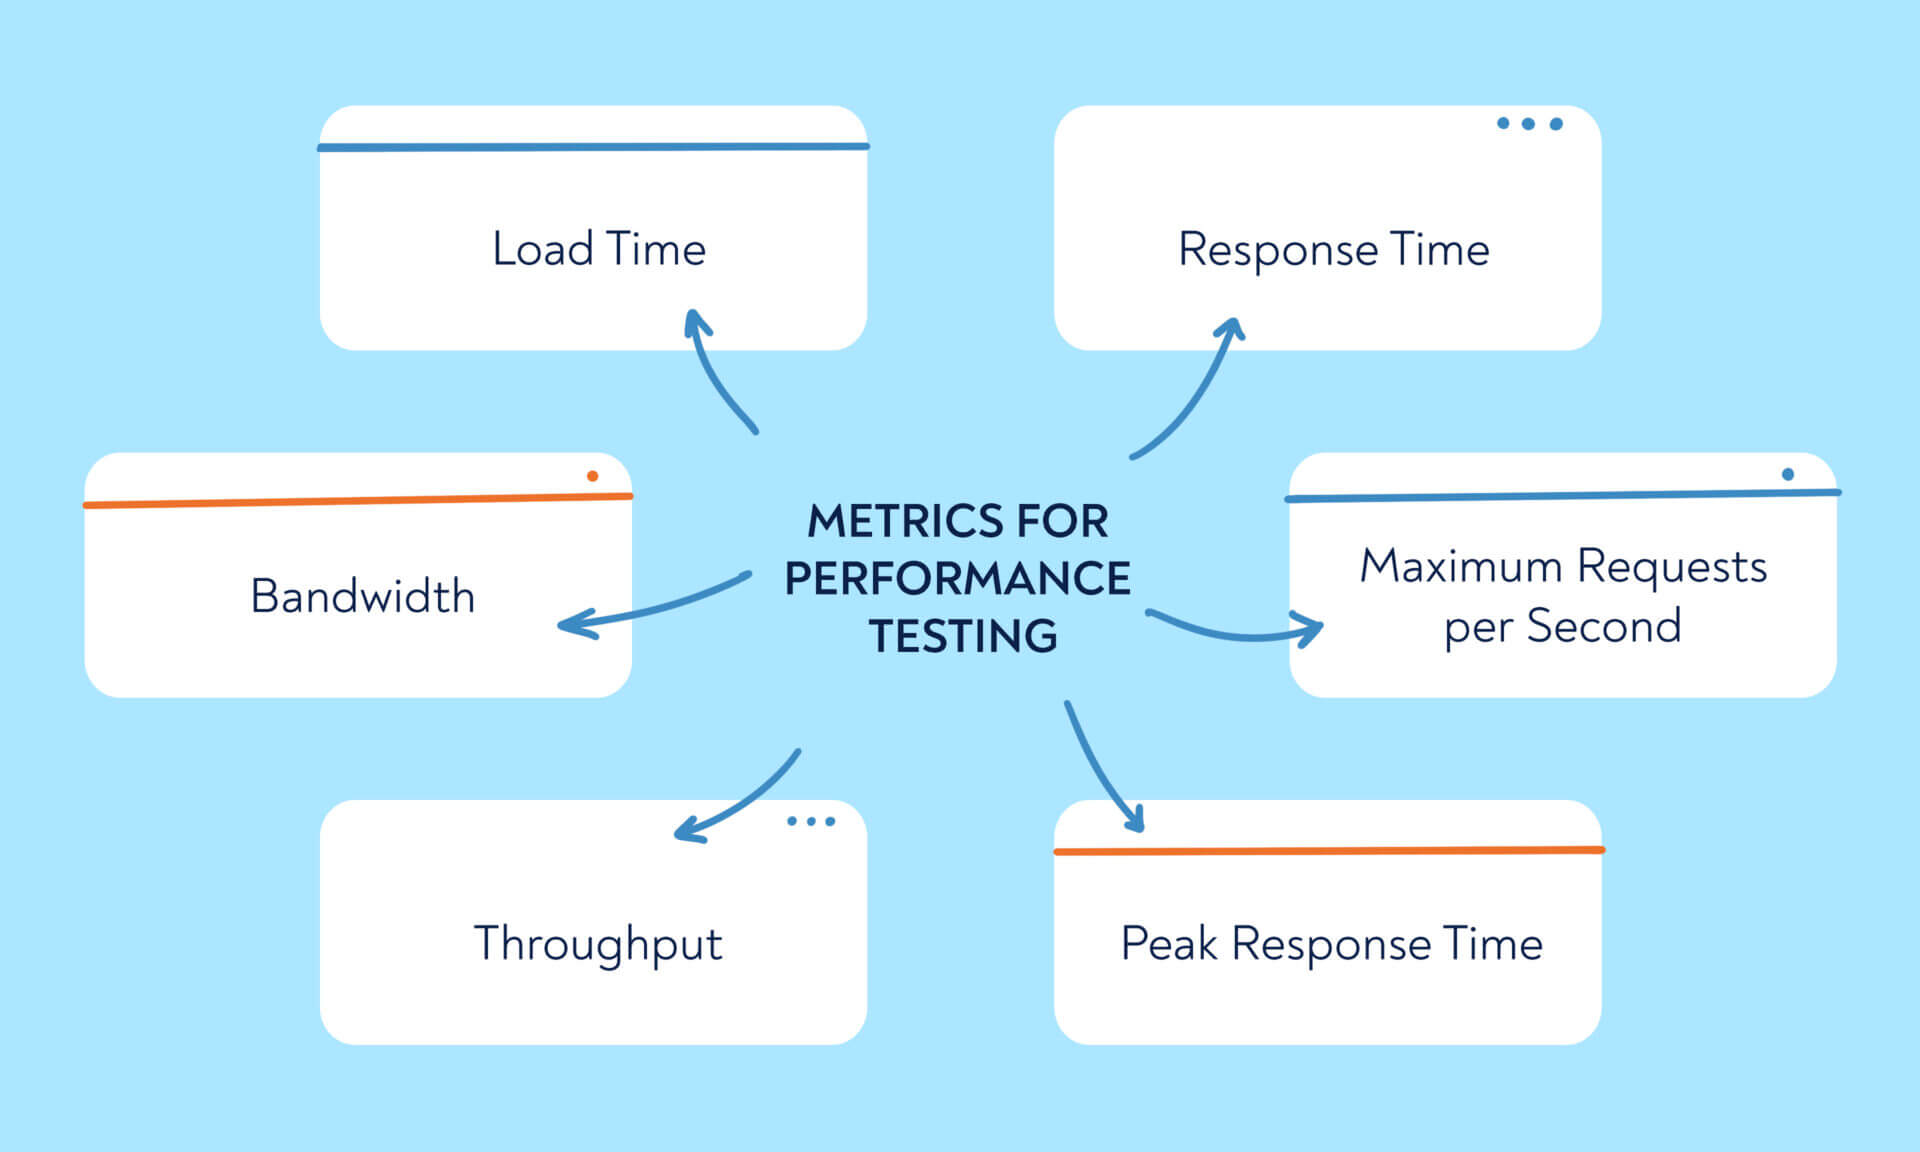 Metrics for performance testing